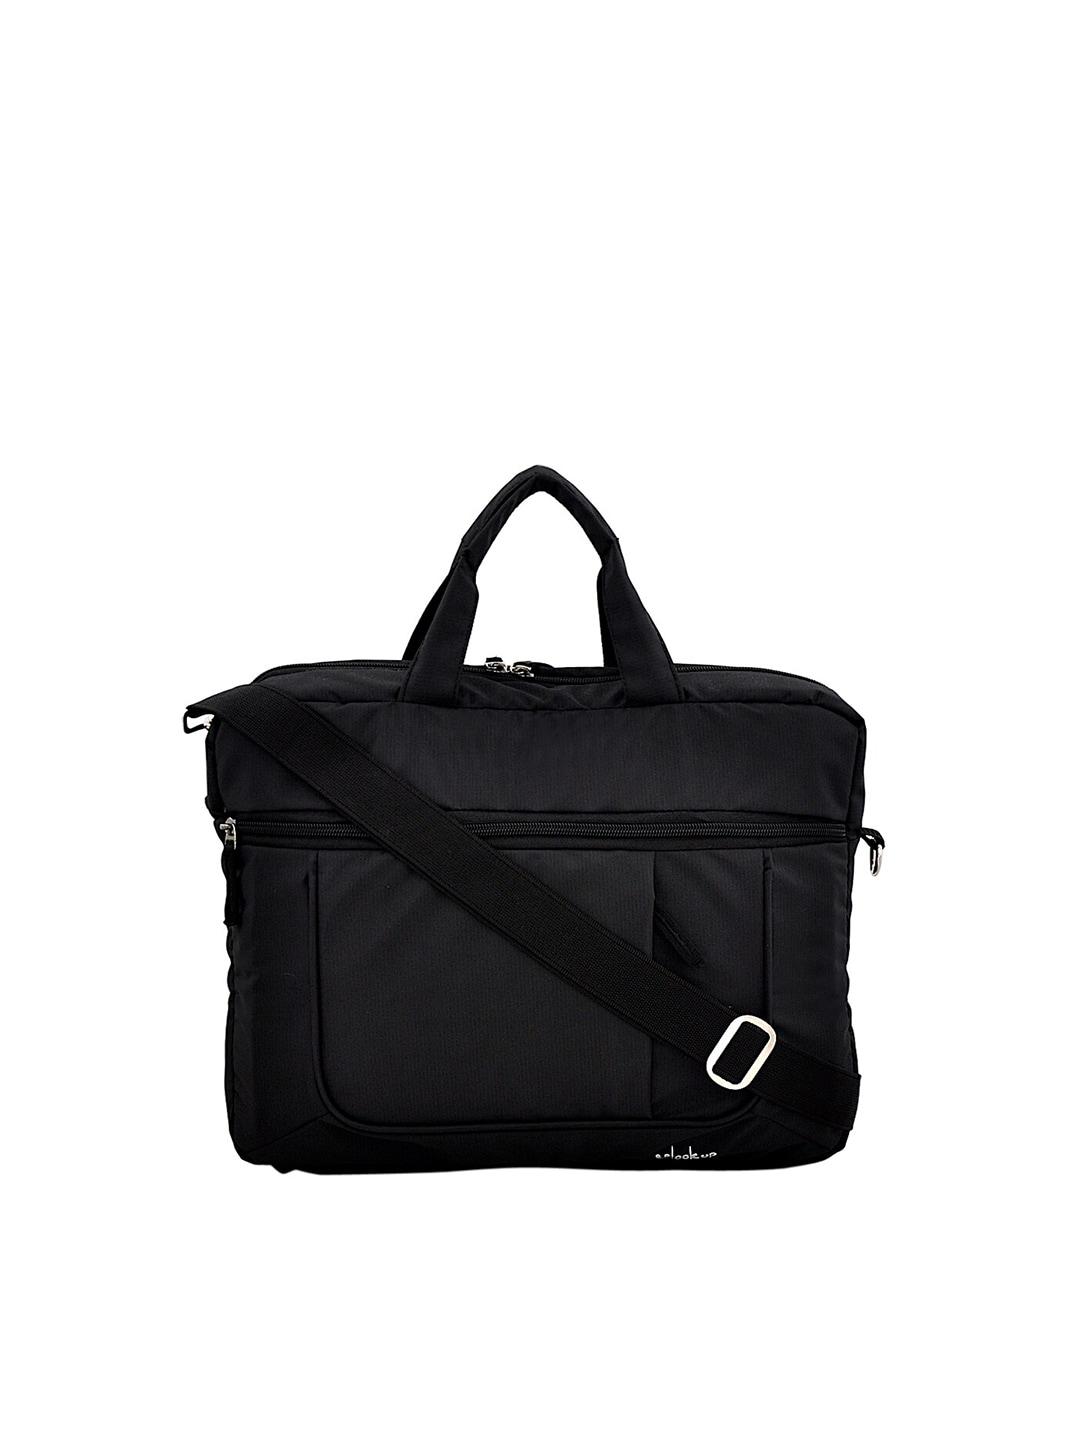 yelloe unisex black laptop bag